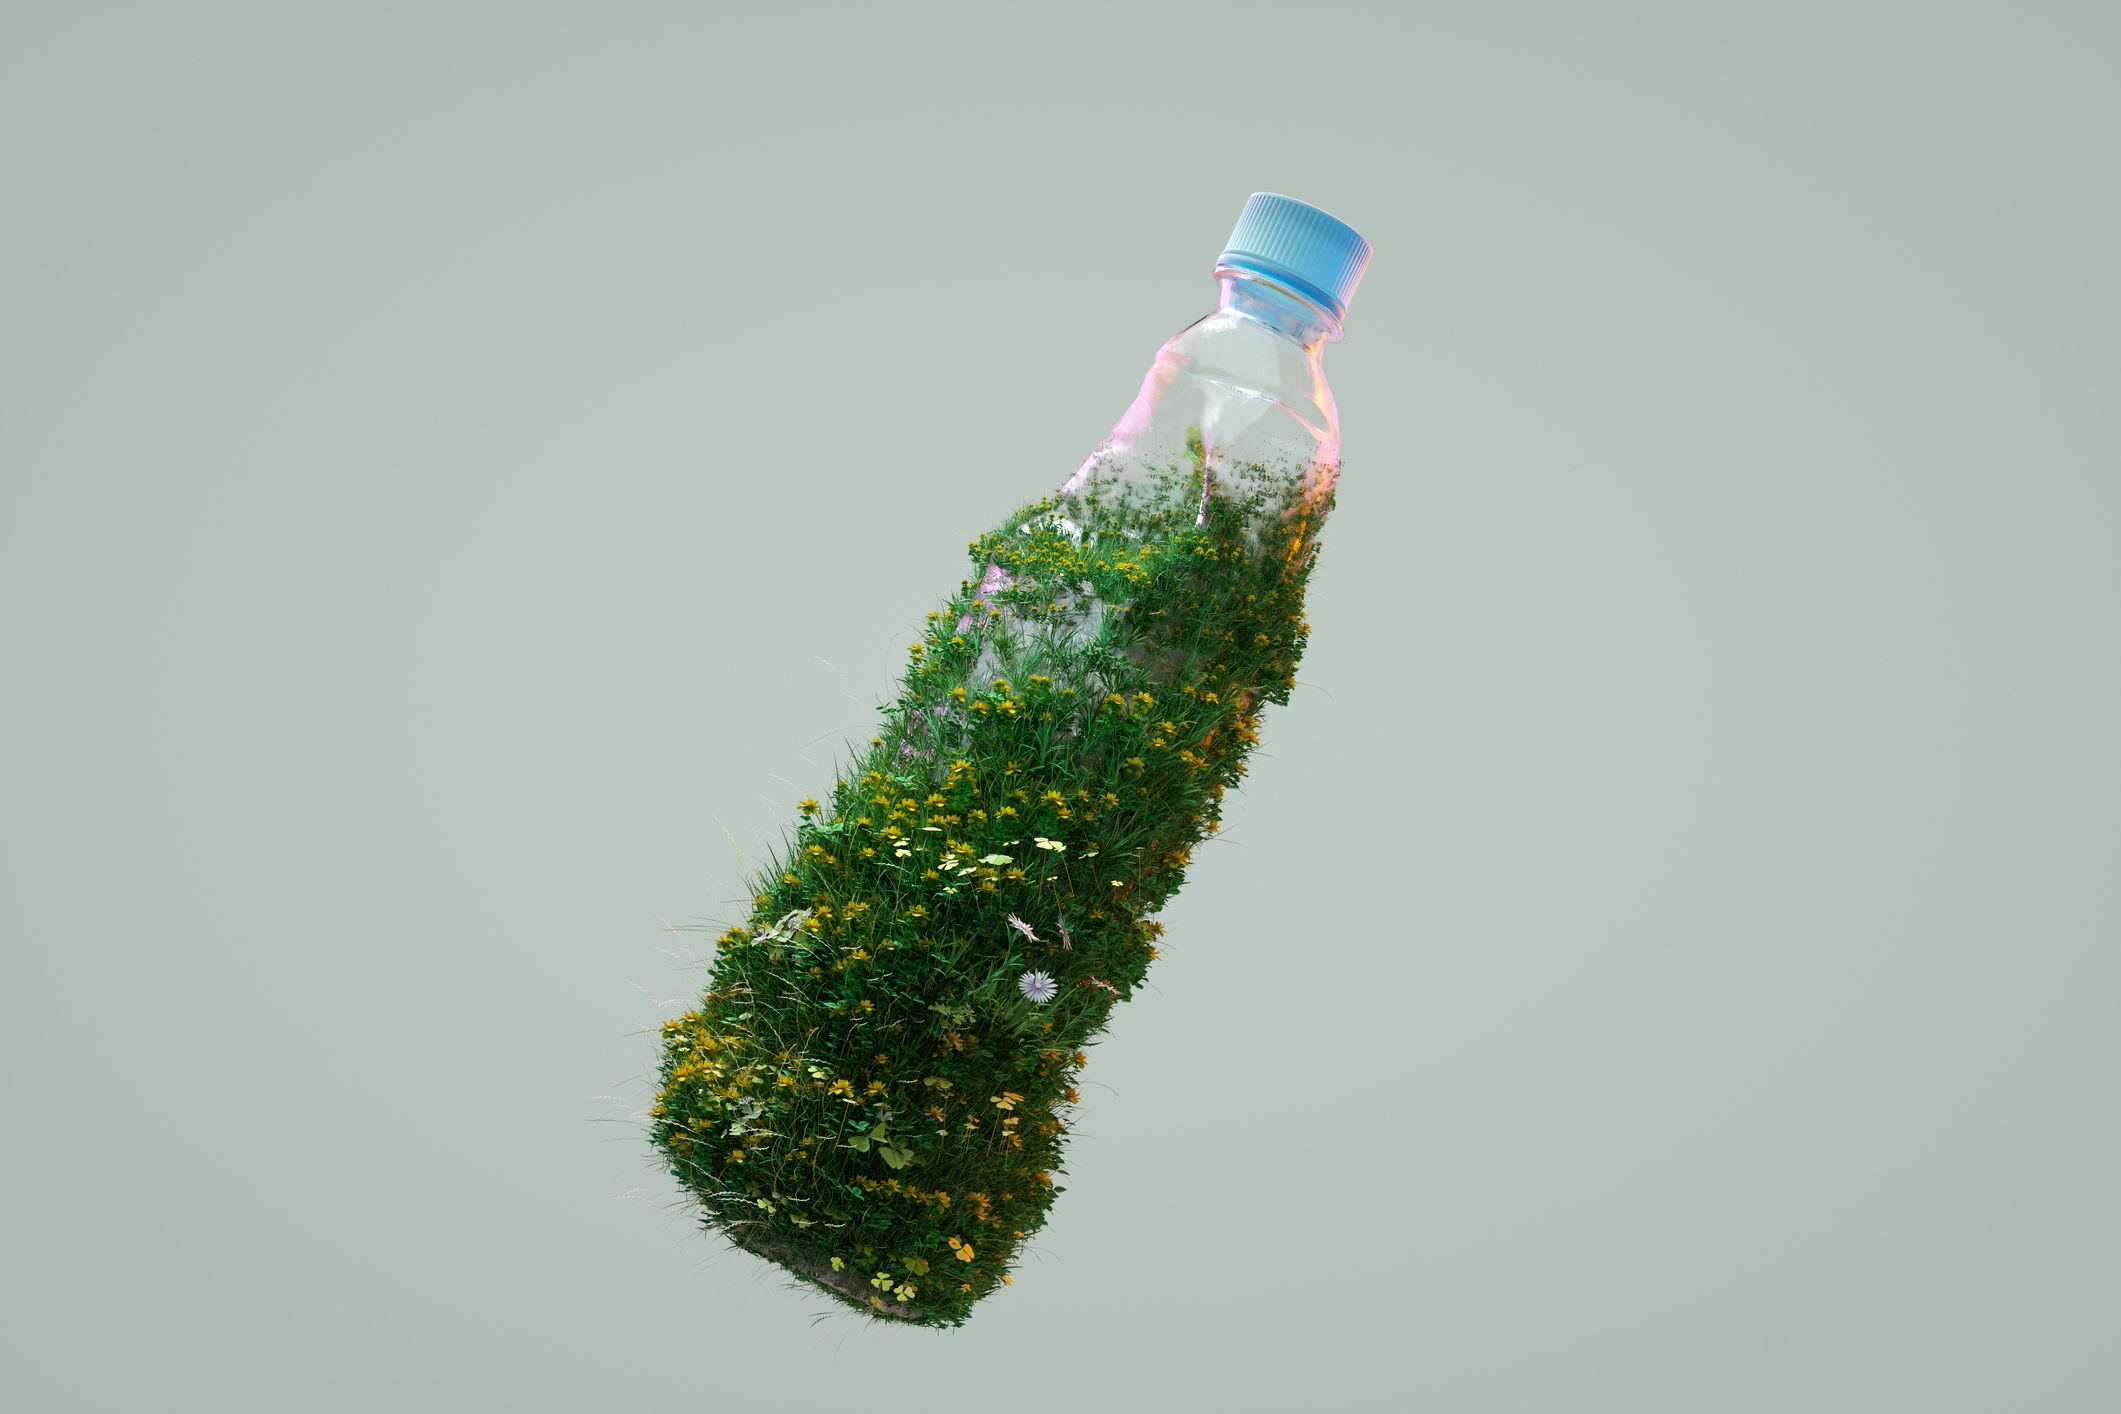 https://hips.hearstapps.com/hmg-prod/images/recycling-plastic-bottle-royalty-free-image-1661206187.jpg